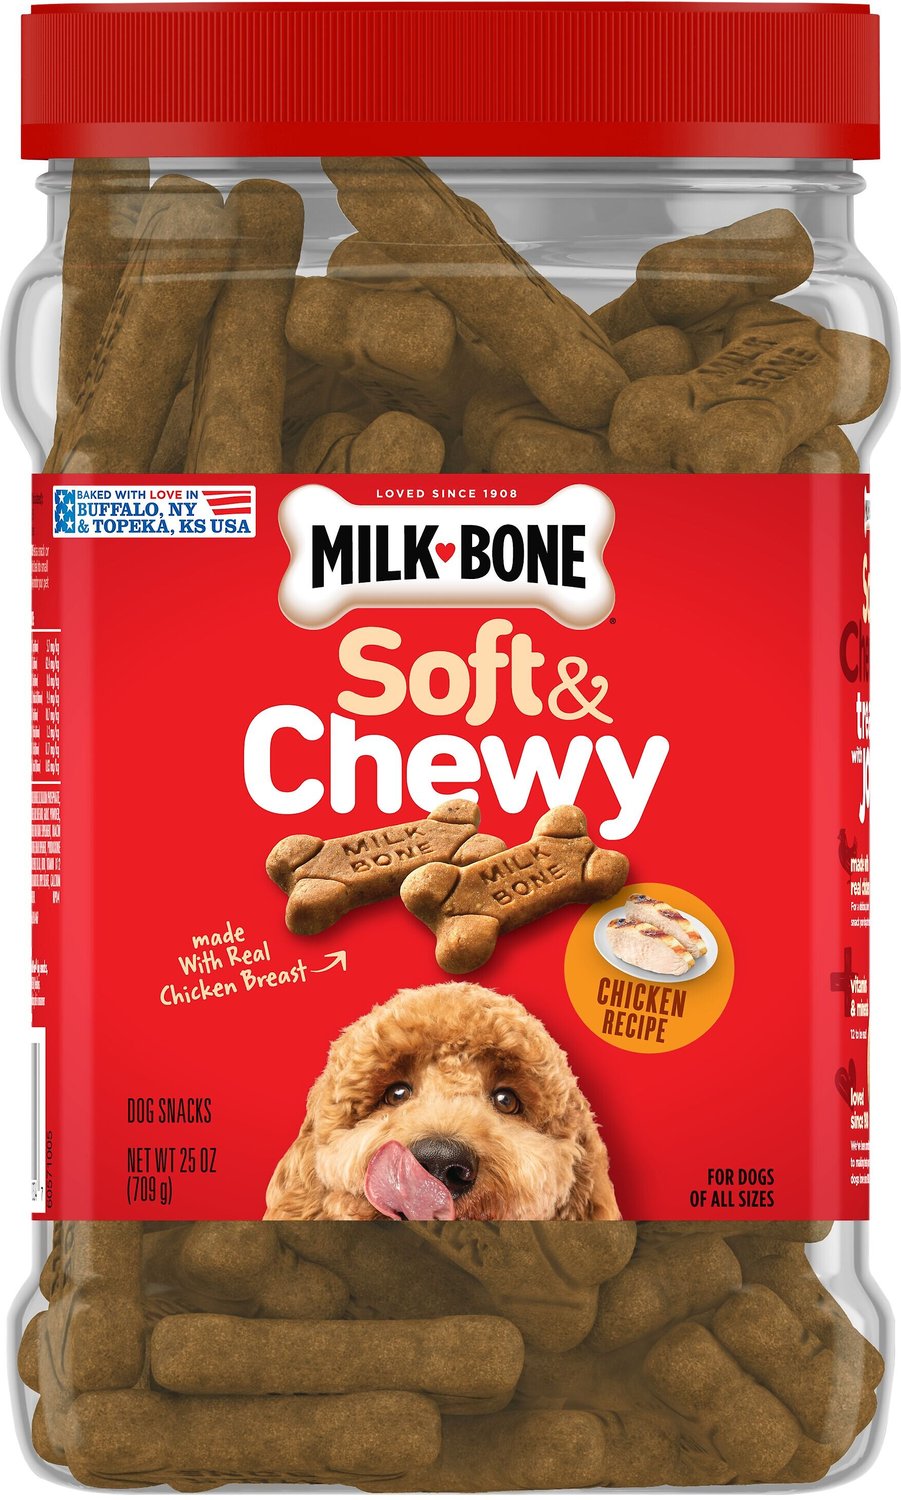 MilkBone Soft & Chewy Chicken Recipe Dog Treats, 25oz